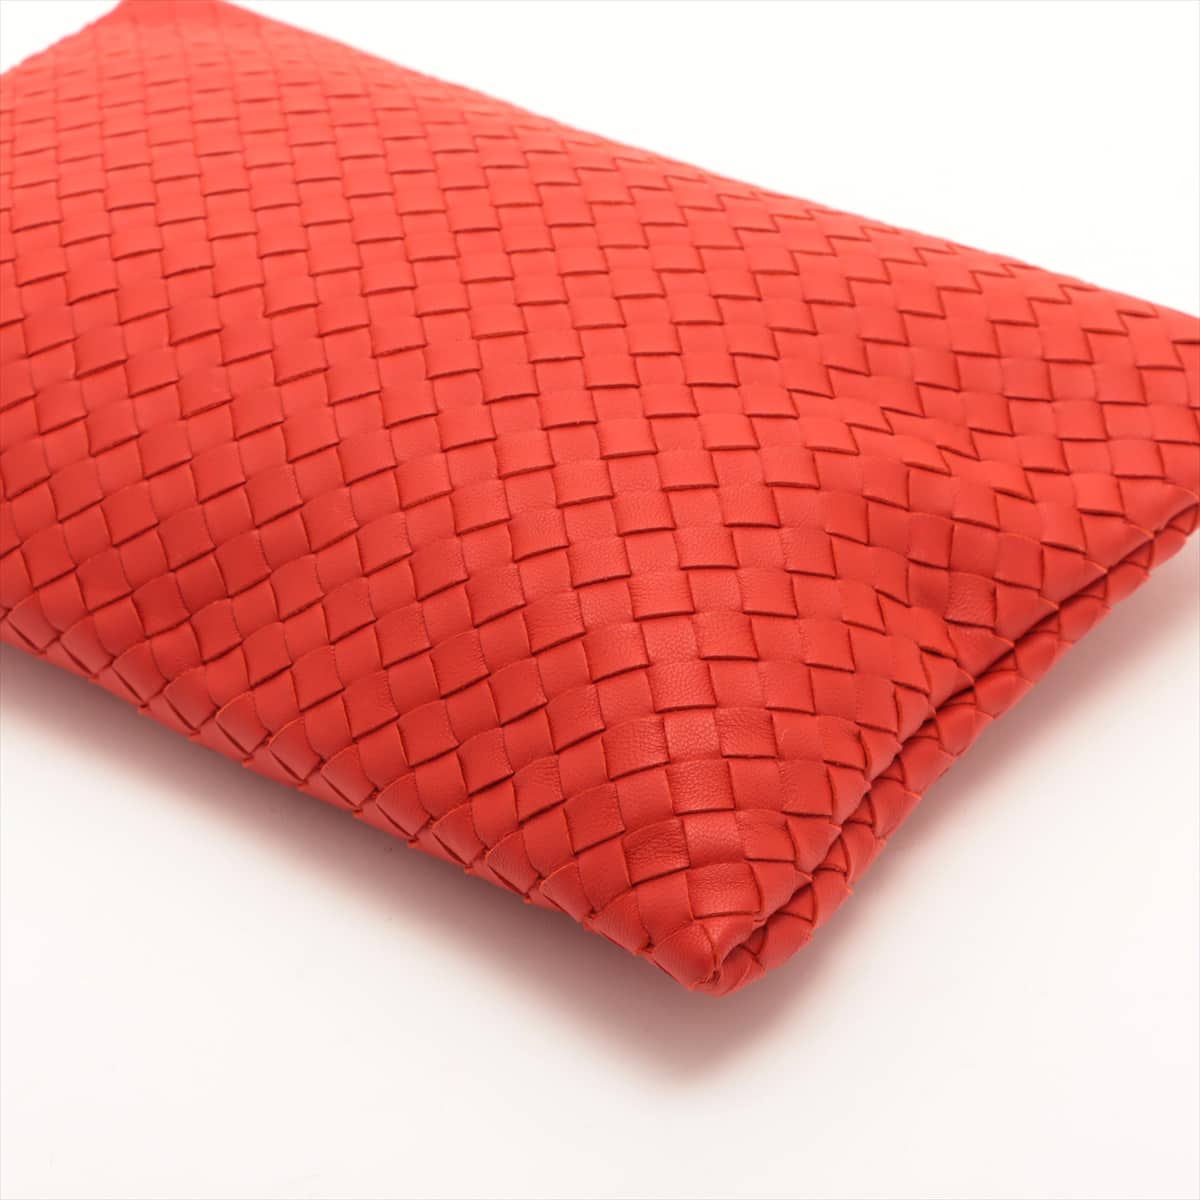 Bottega Veneta Intrecciato Leather Clutch bag Red